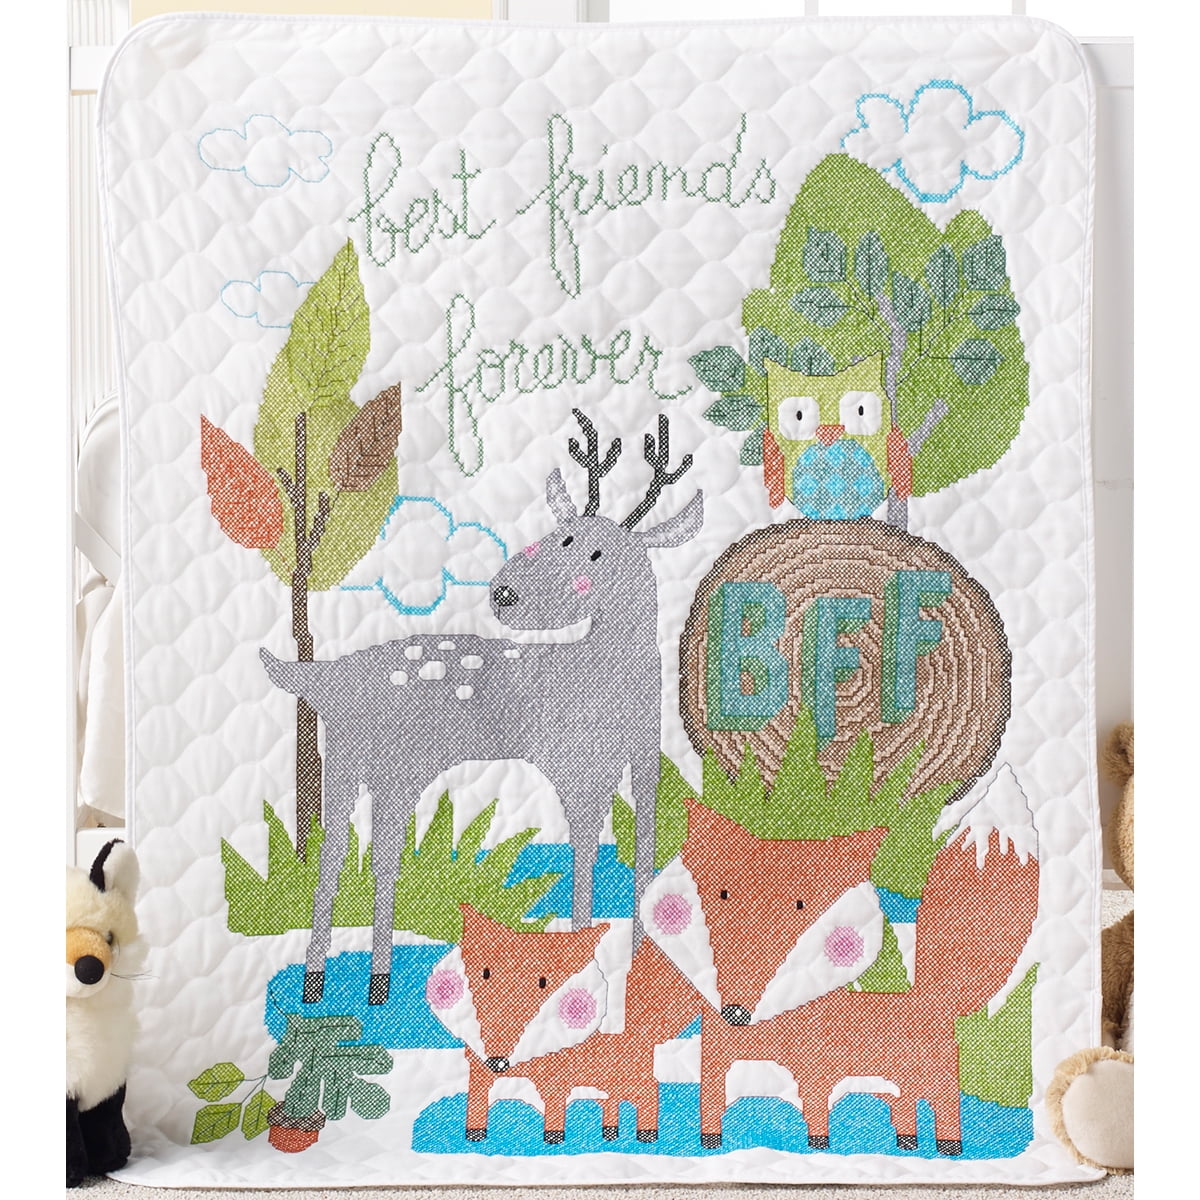 Bucilla bucilla - happy holidays - stamped cross stitch lap quilt kit 84019